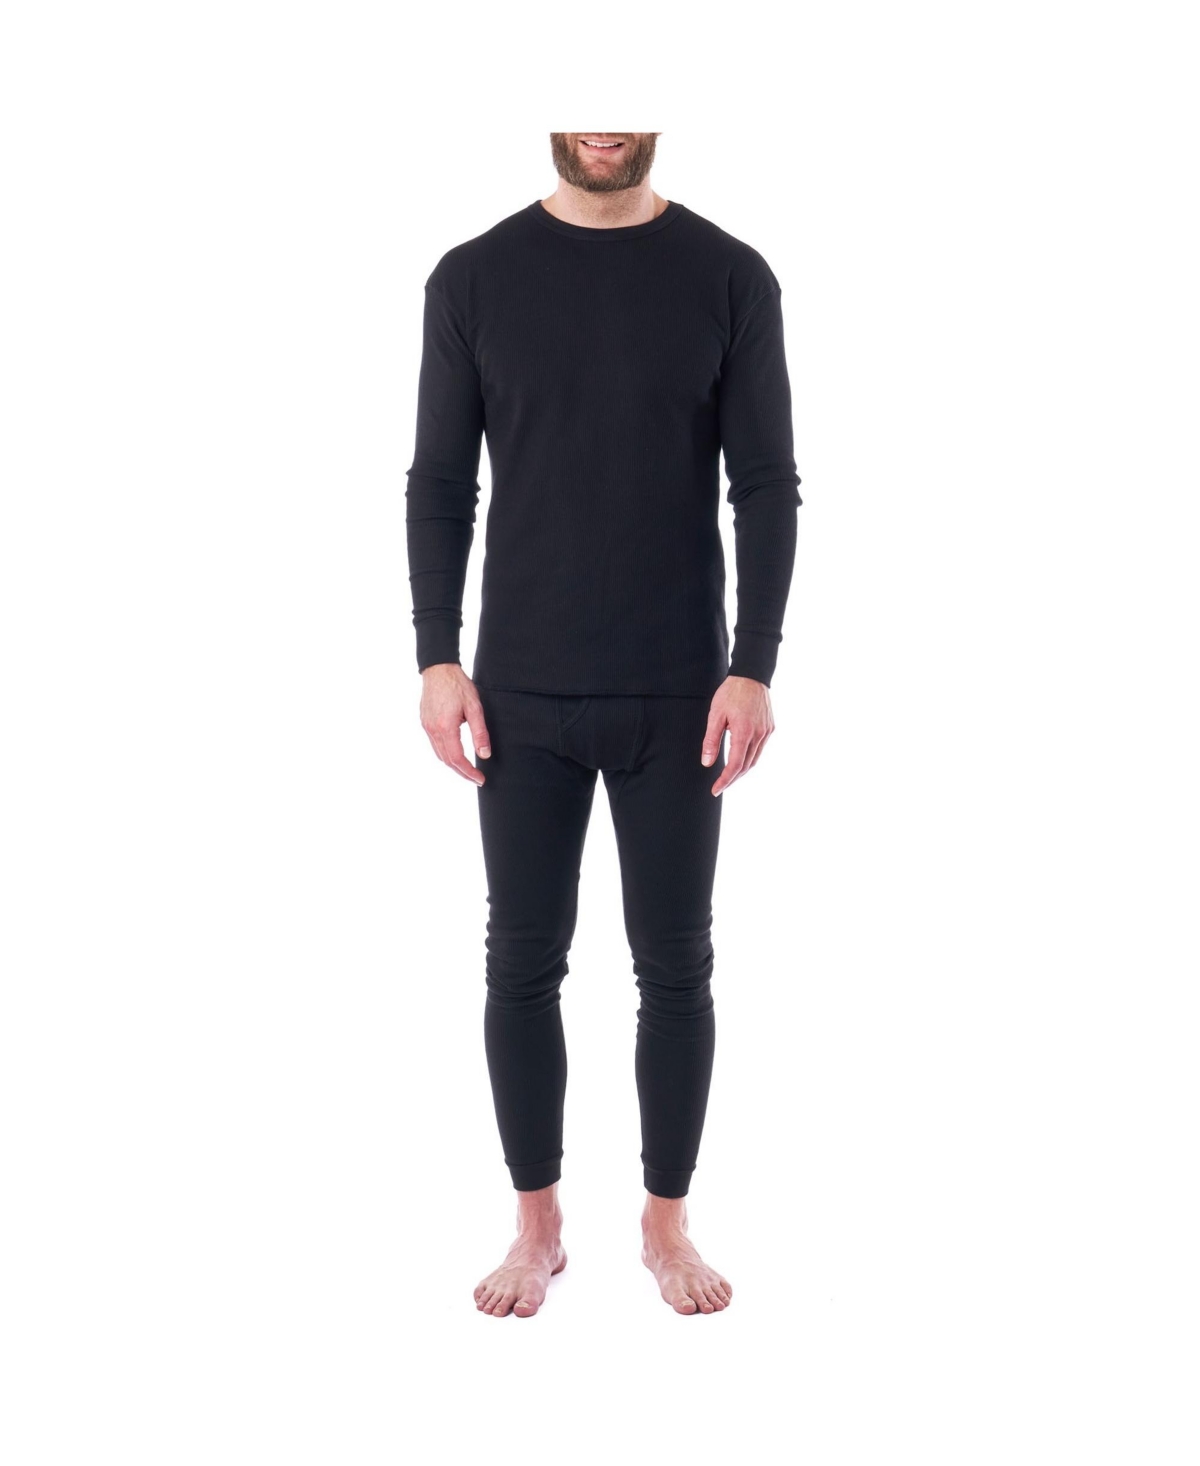 Men's 2 Pc Thermal Long John Underwear Set Waffle Knit Top & Bottom - black set